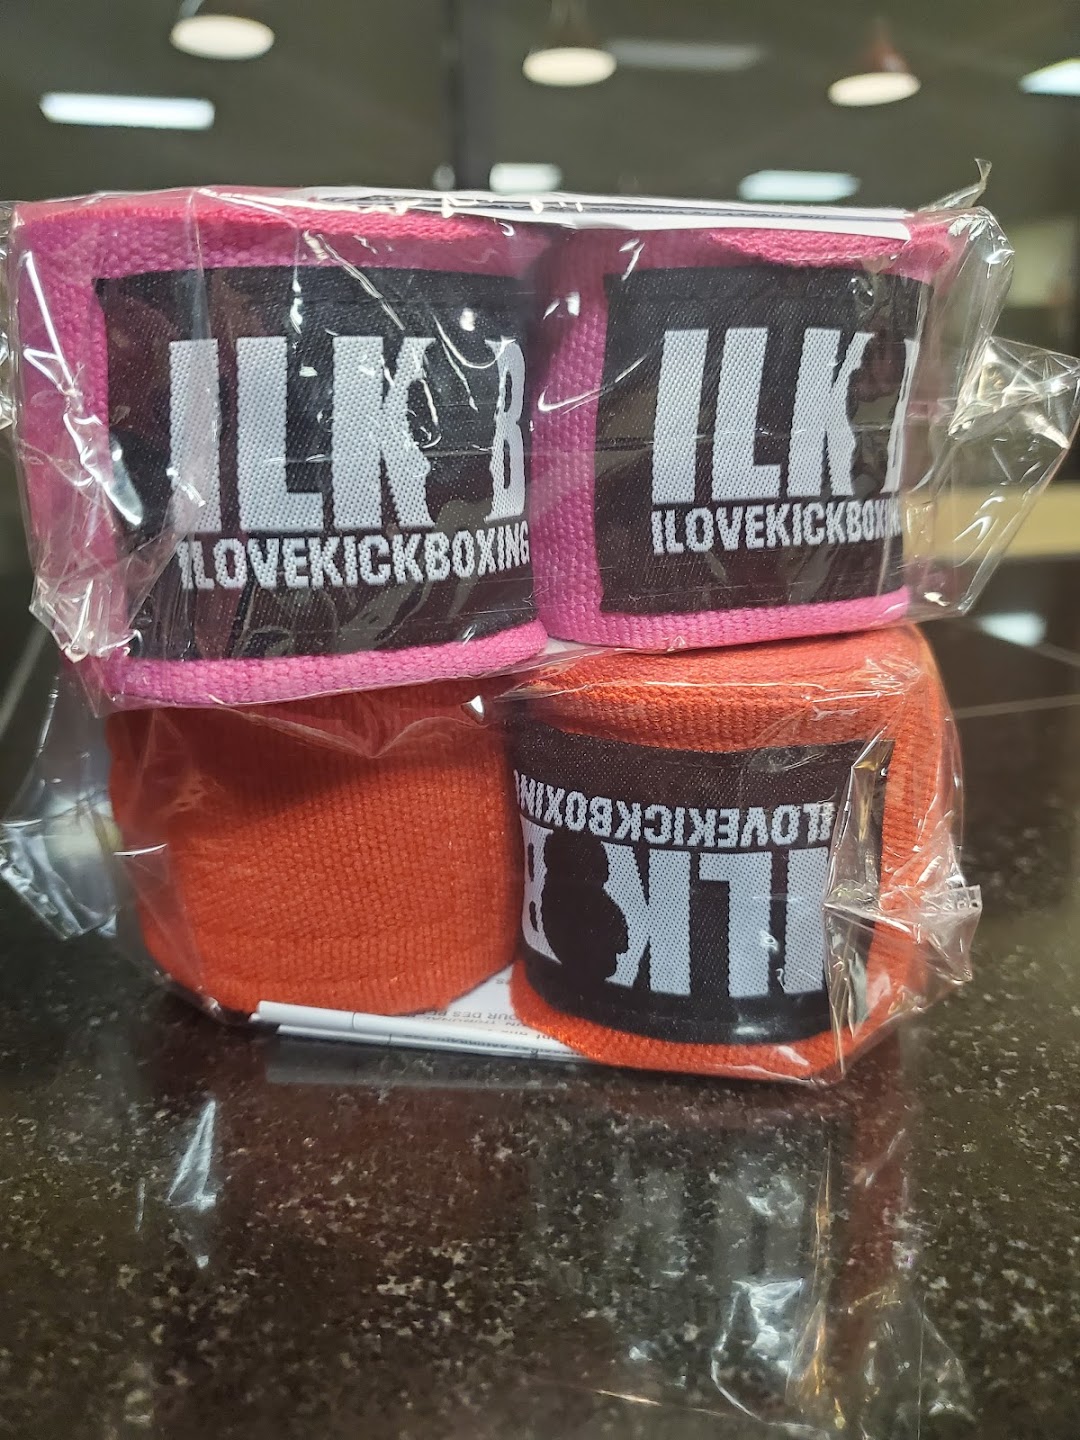 iLoveKickboxing - Northwest Las Vegas